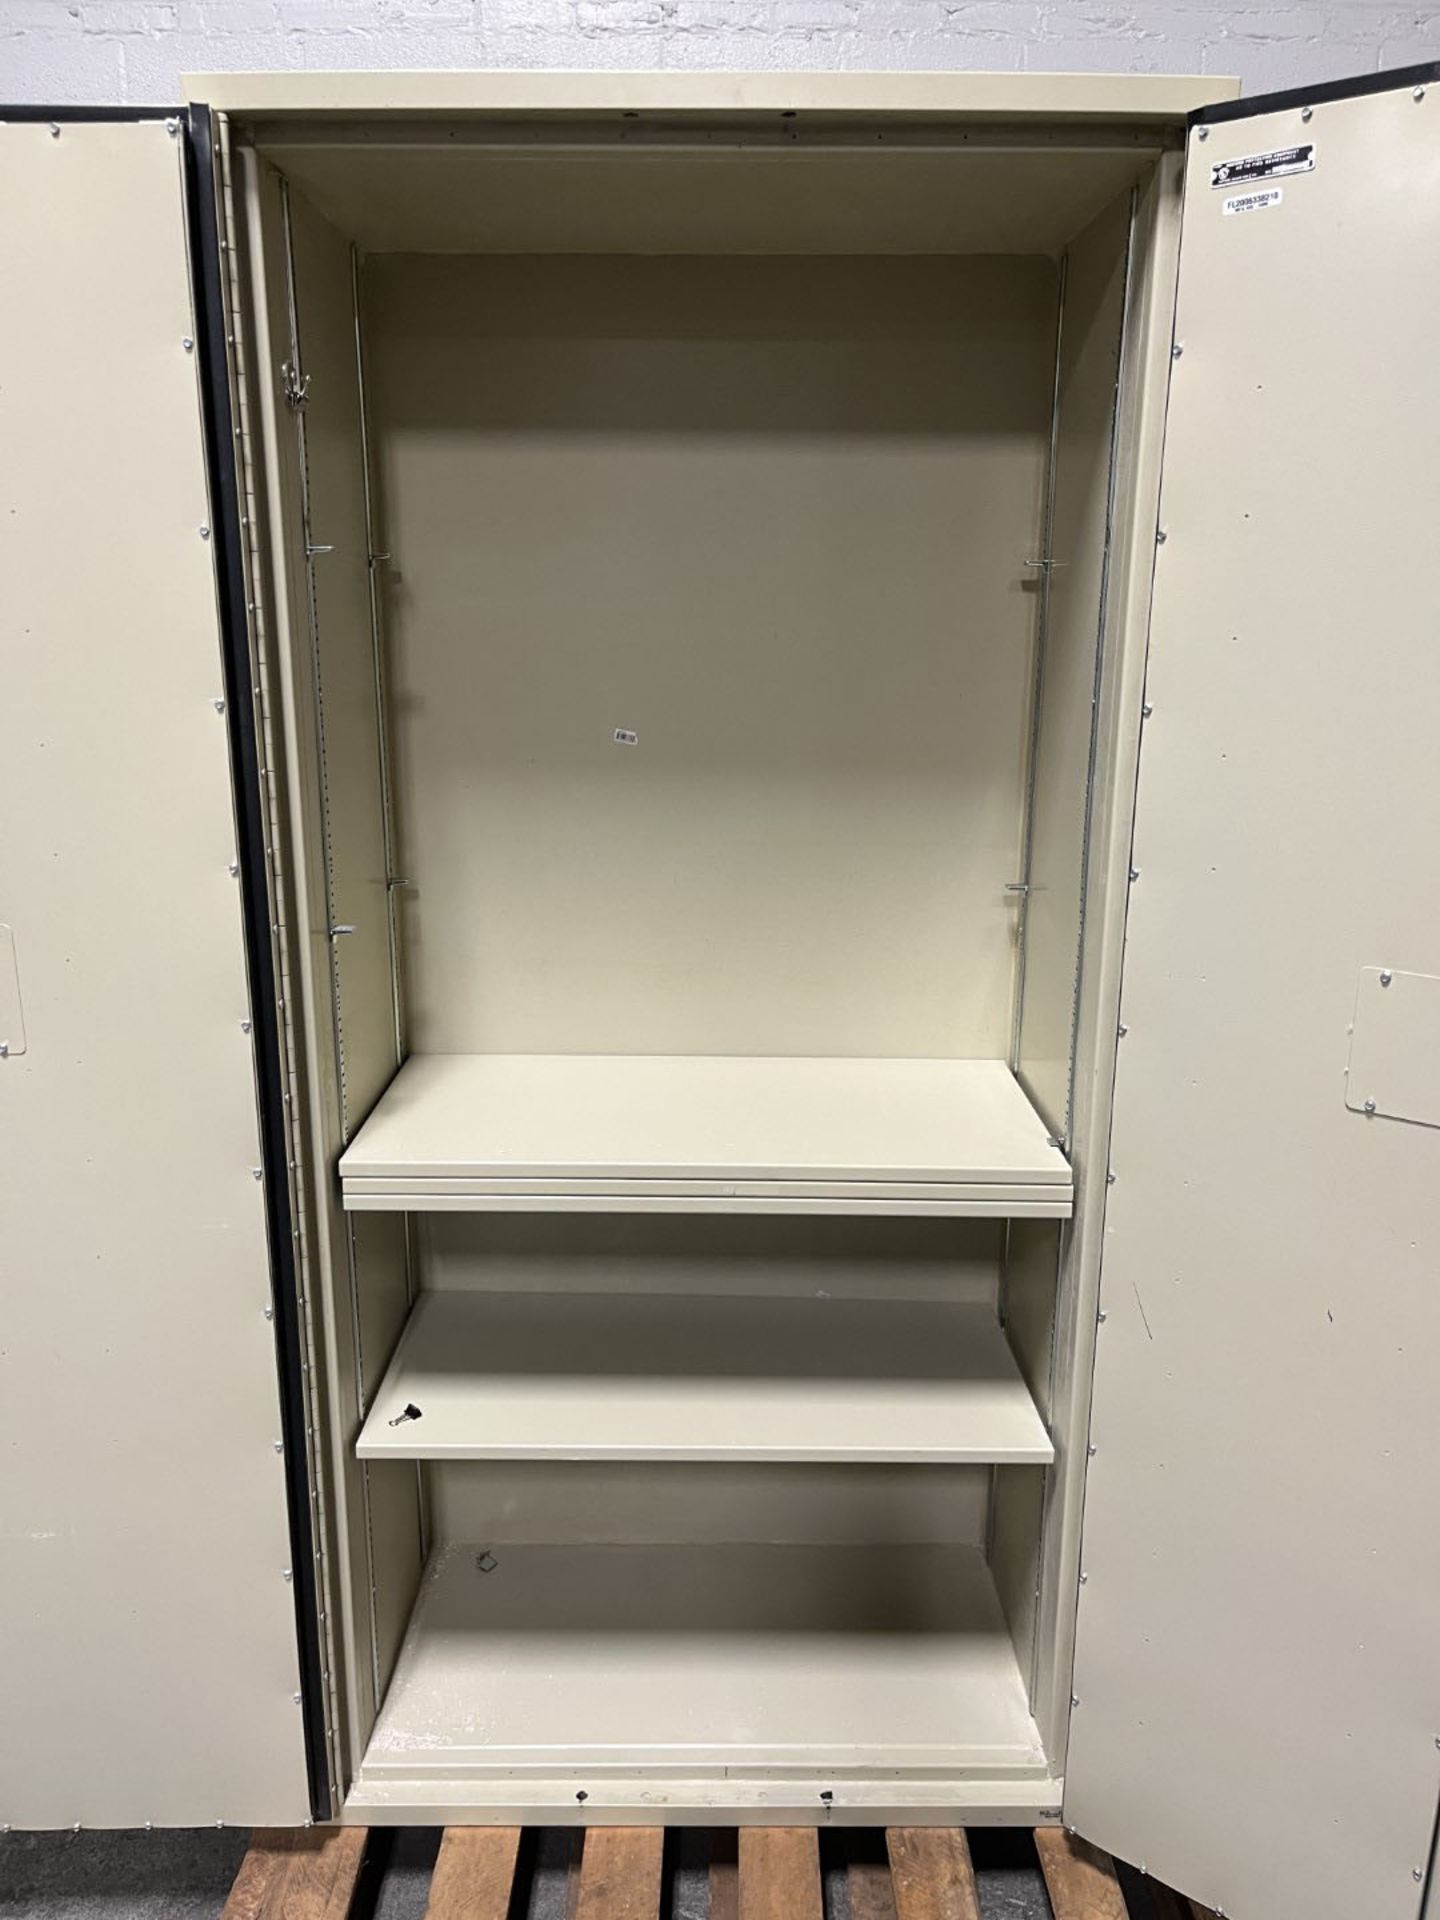 FireKing Fire Safe Storage Cabinet - Image 5 of 5